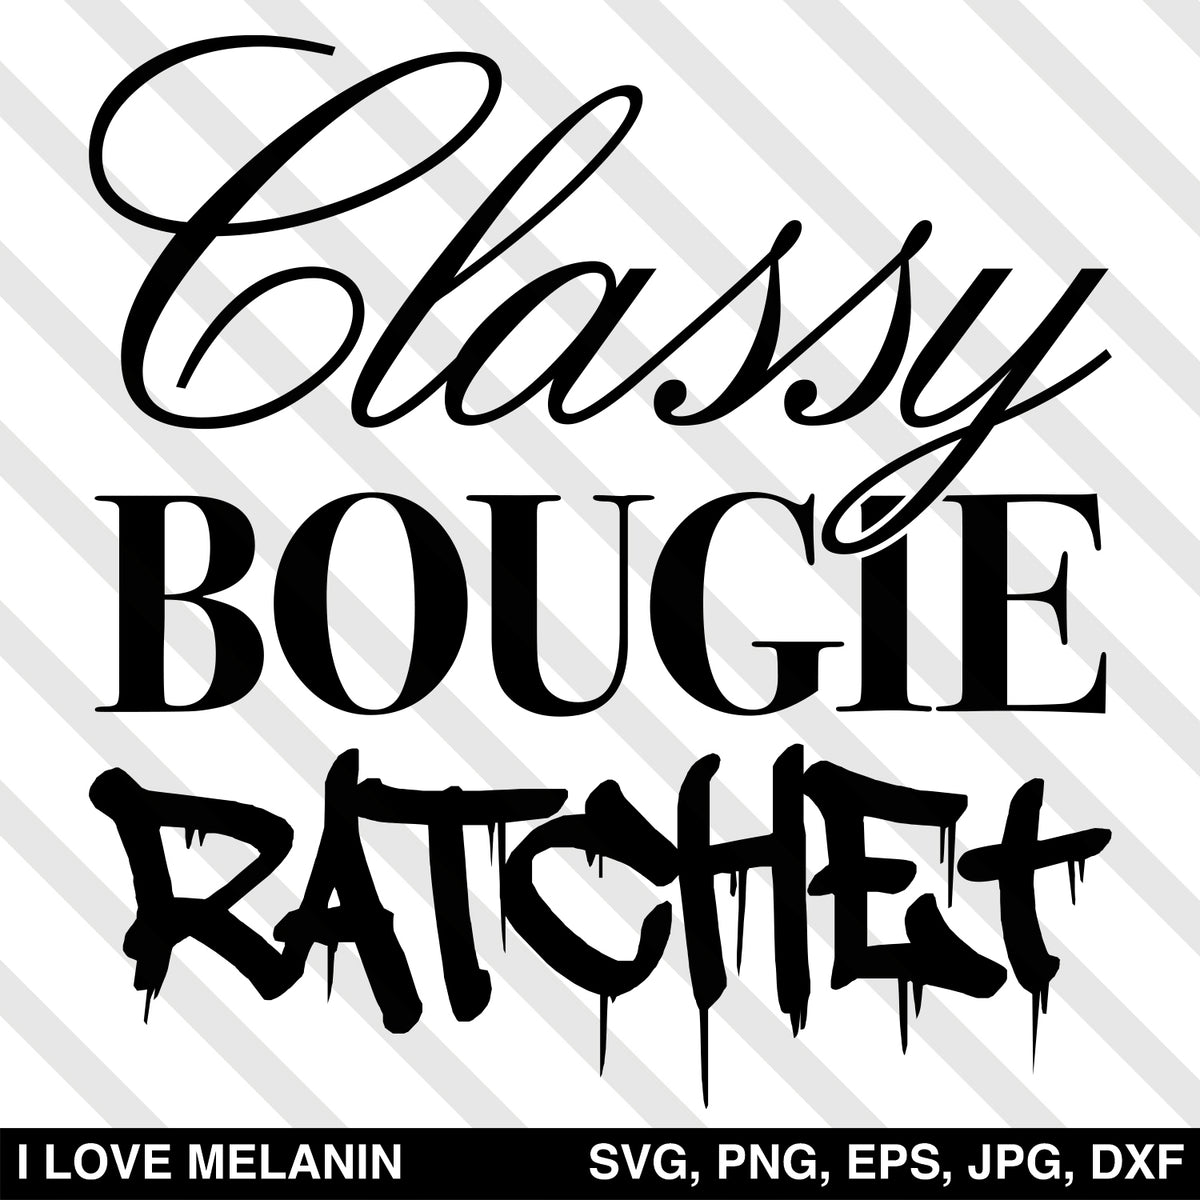 Download Classy Bougie Ratchet SVG - I Love Melanin